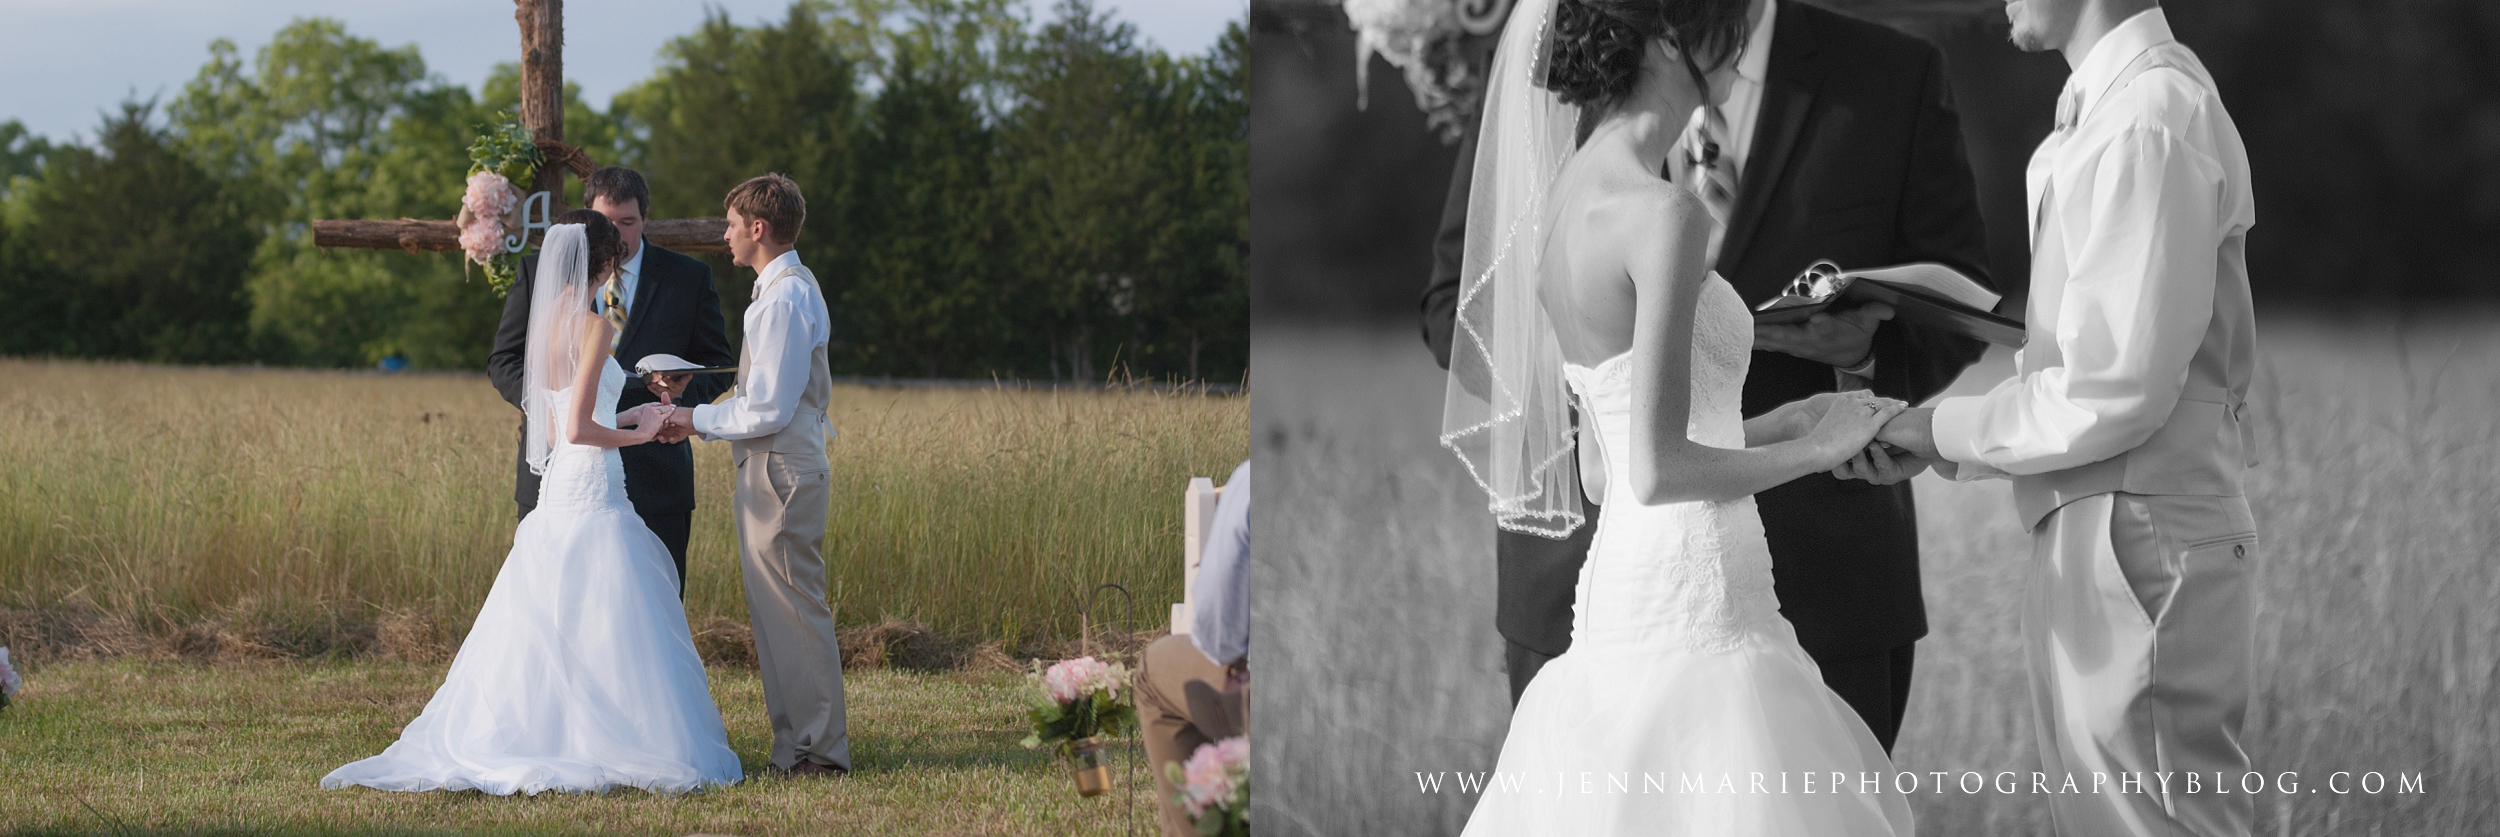 JennMarie Photography - South Carolina Portrait & Wedding Photography - Weddings